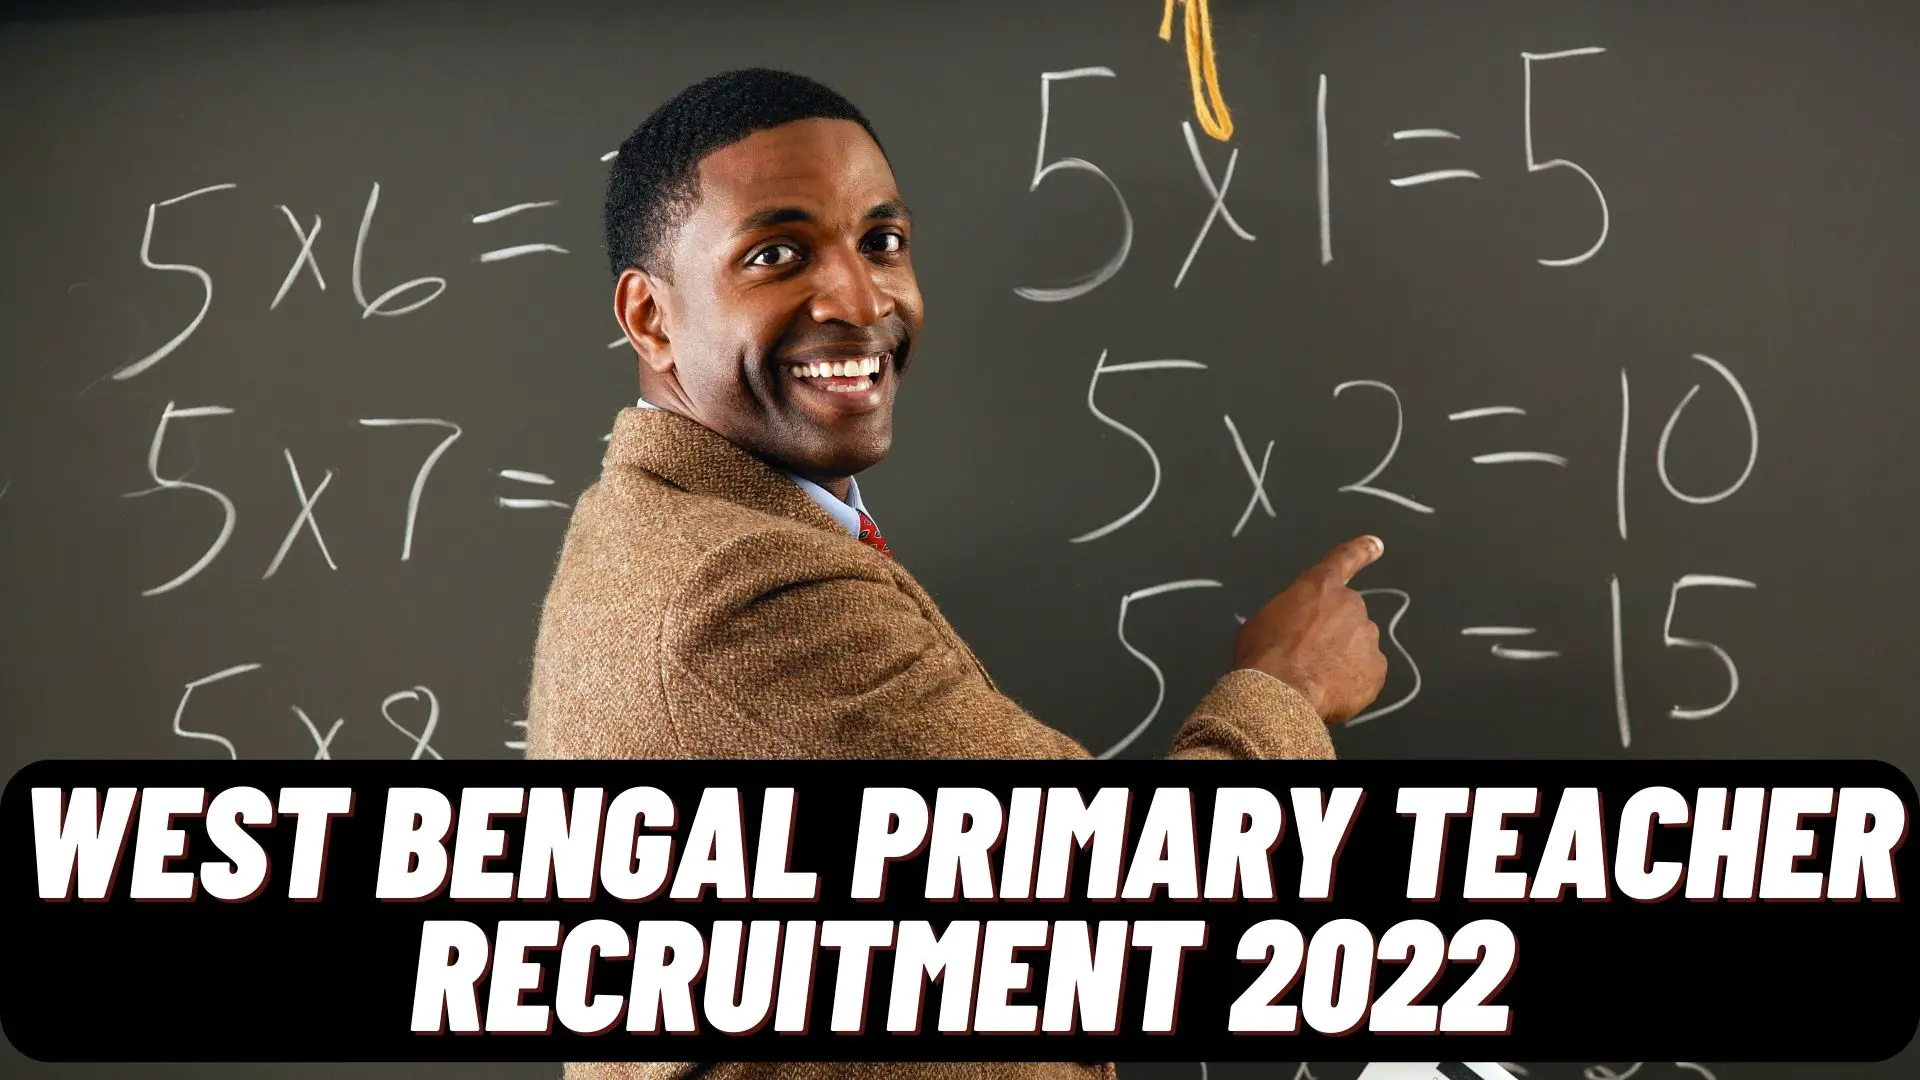 West Bengal Primary Teacher Recruitment 2022